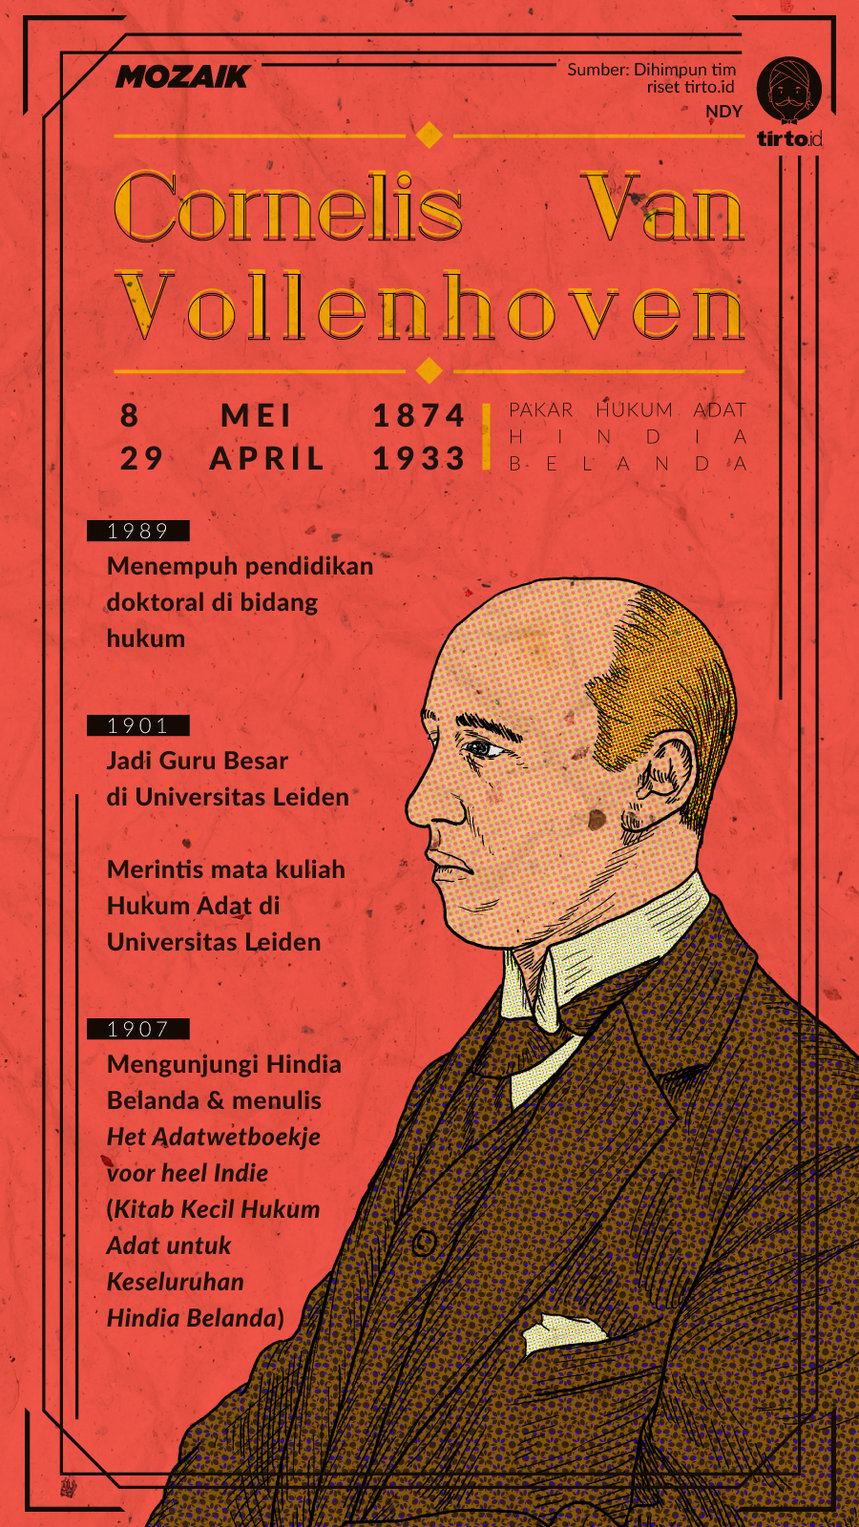 Sejarah Hidup Cornelis Van Vollenhoven, Bapak Hukum Adat Indonesia - tirto.id